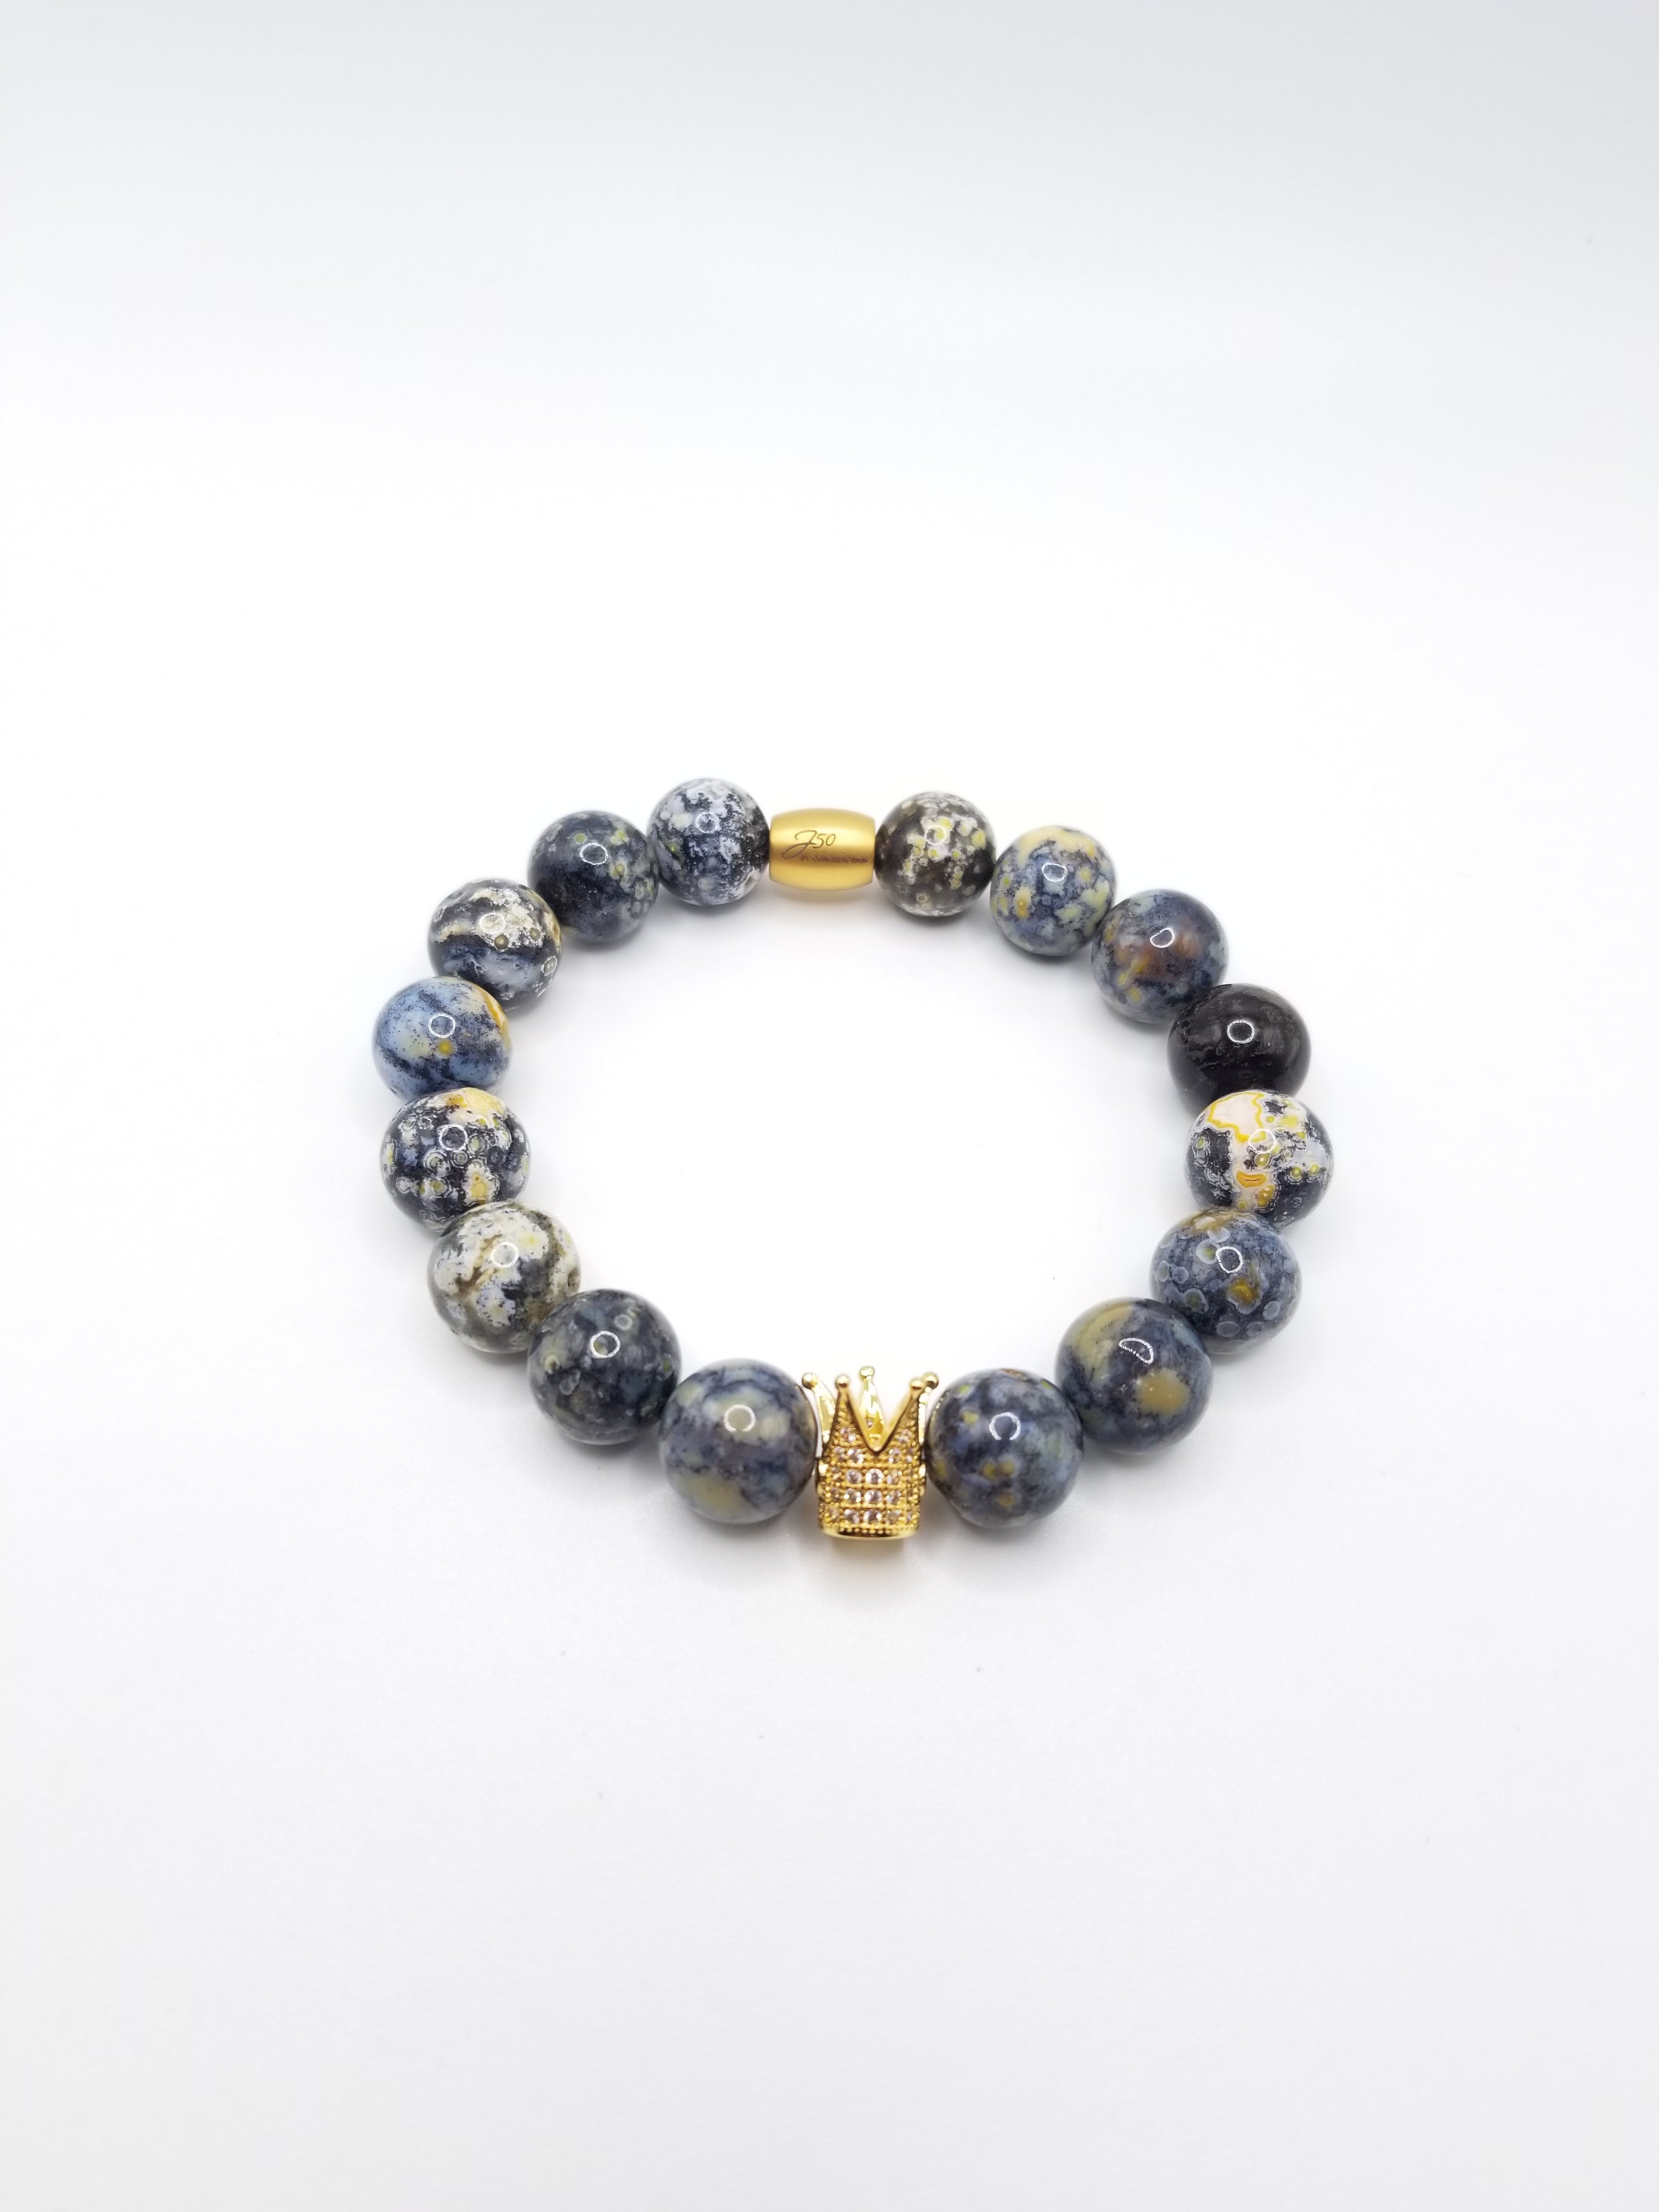 Blue Ocean Jasper Beaded Bracelet with Crown